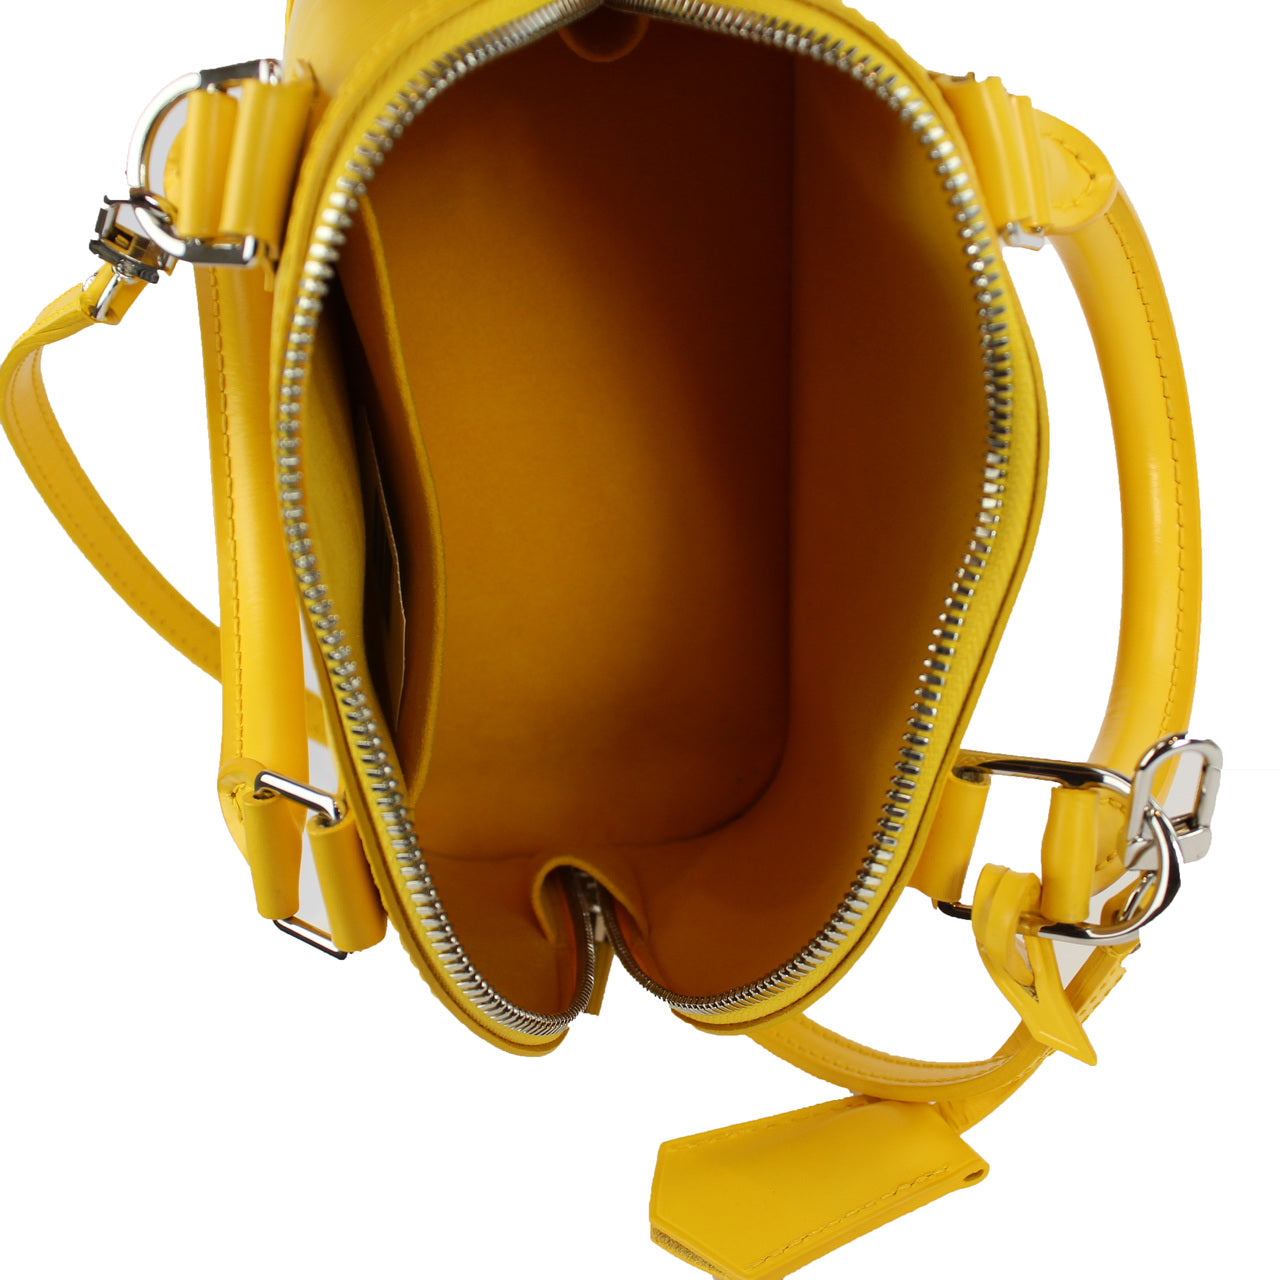 LOUIS VUITTON Alma bag in yellow epi leather, zipper, …